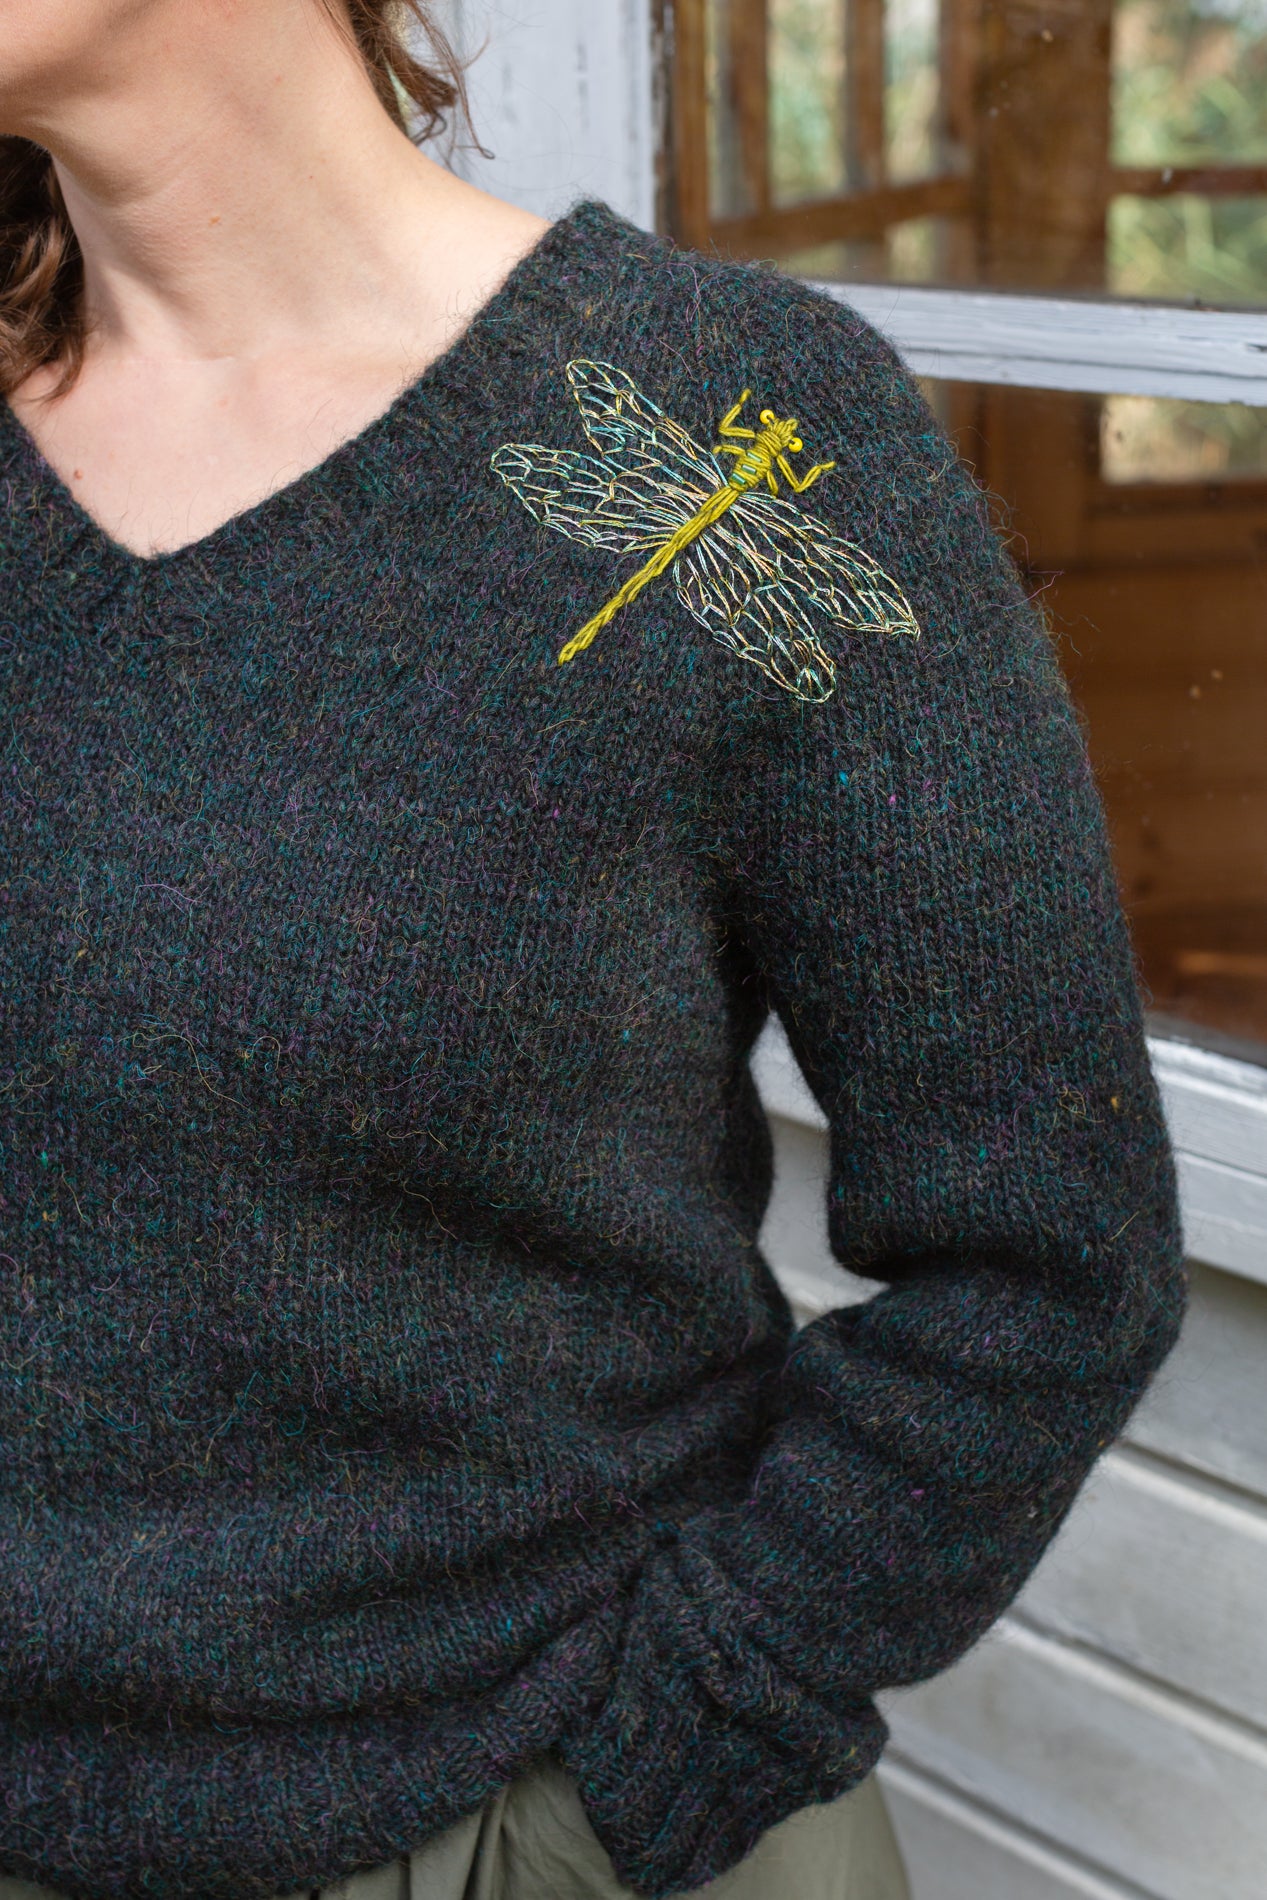 Embroidery on Knits (Judit Gummlich) – Spun